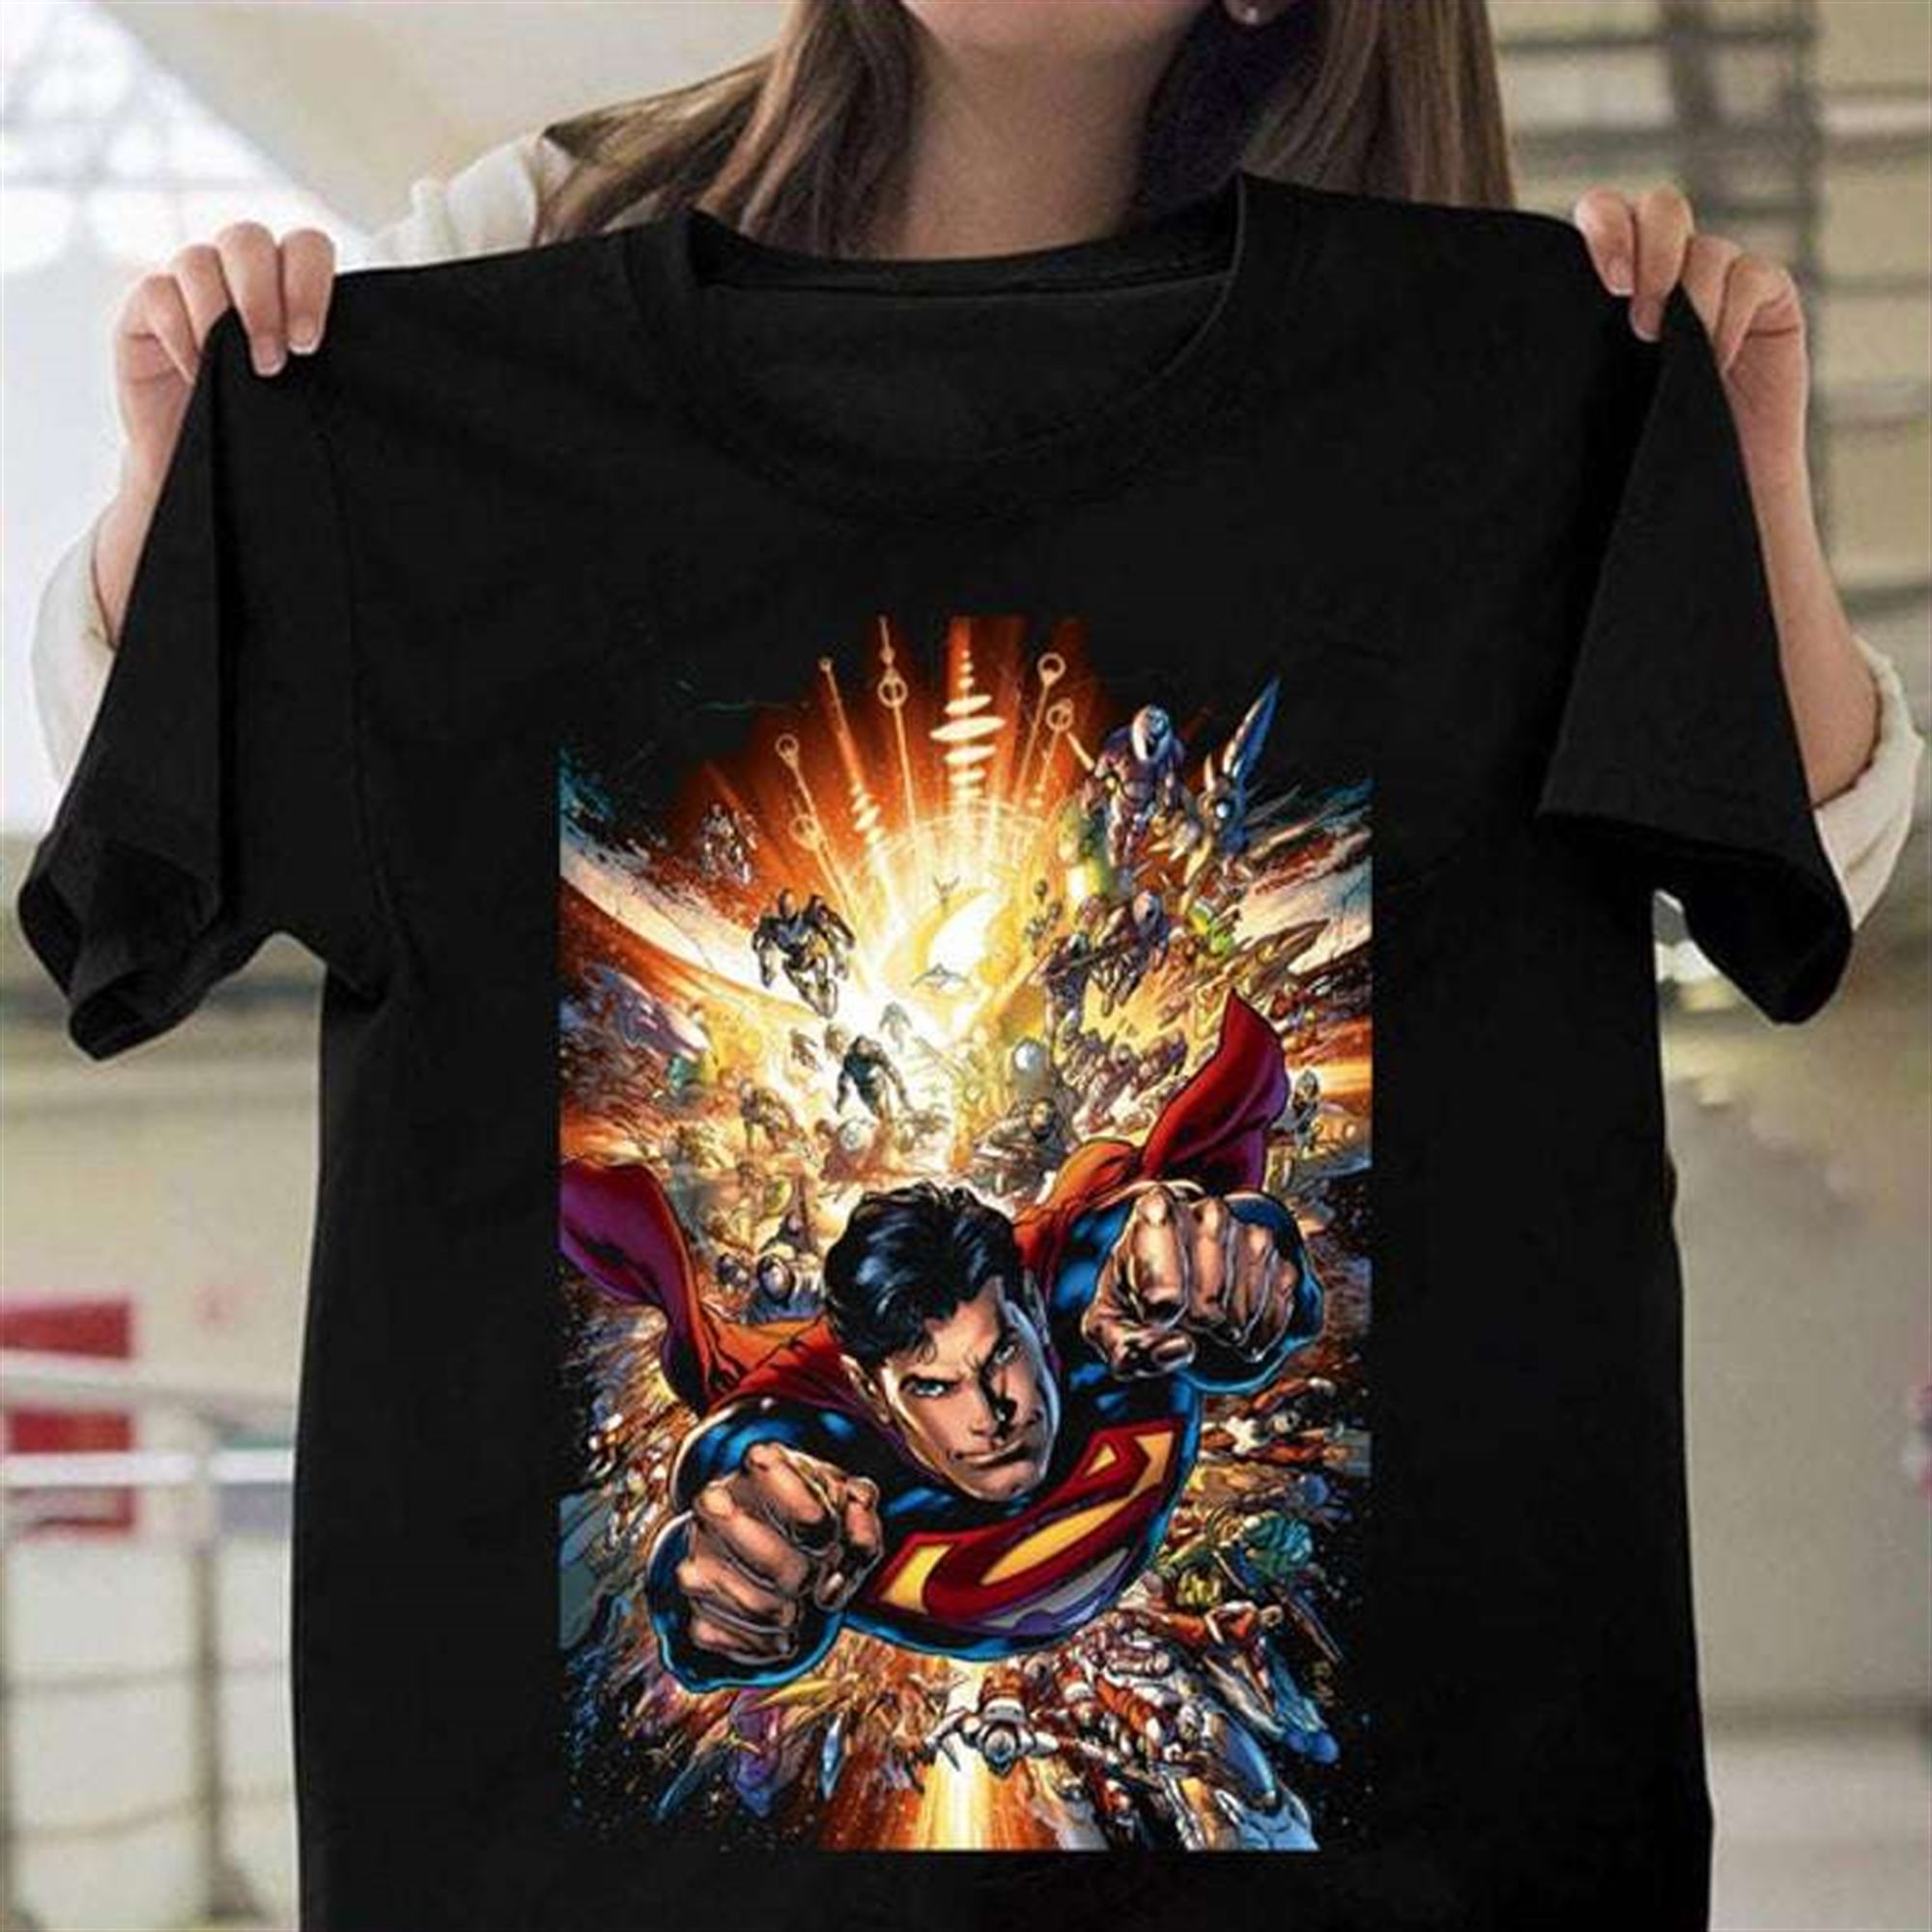 Superman Dc Comics T Shirt Size Up To 5xl